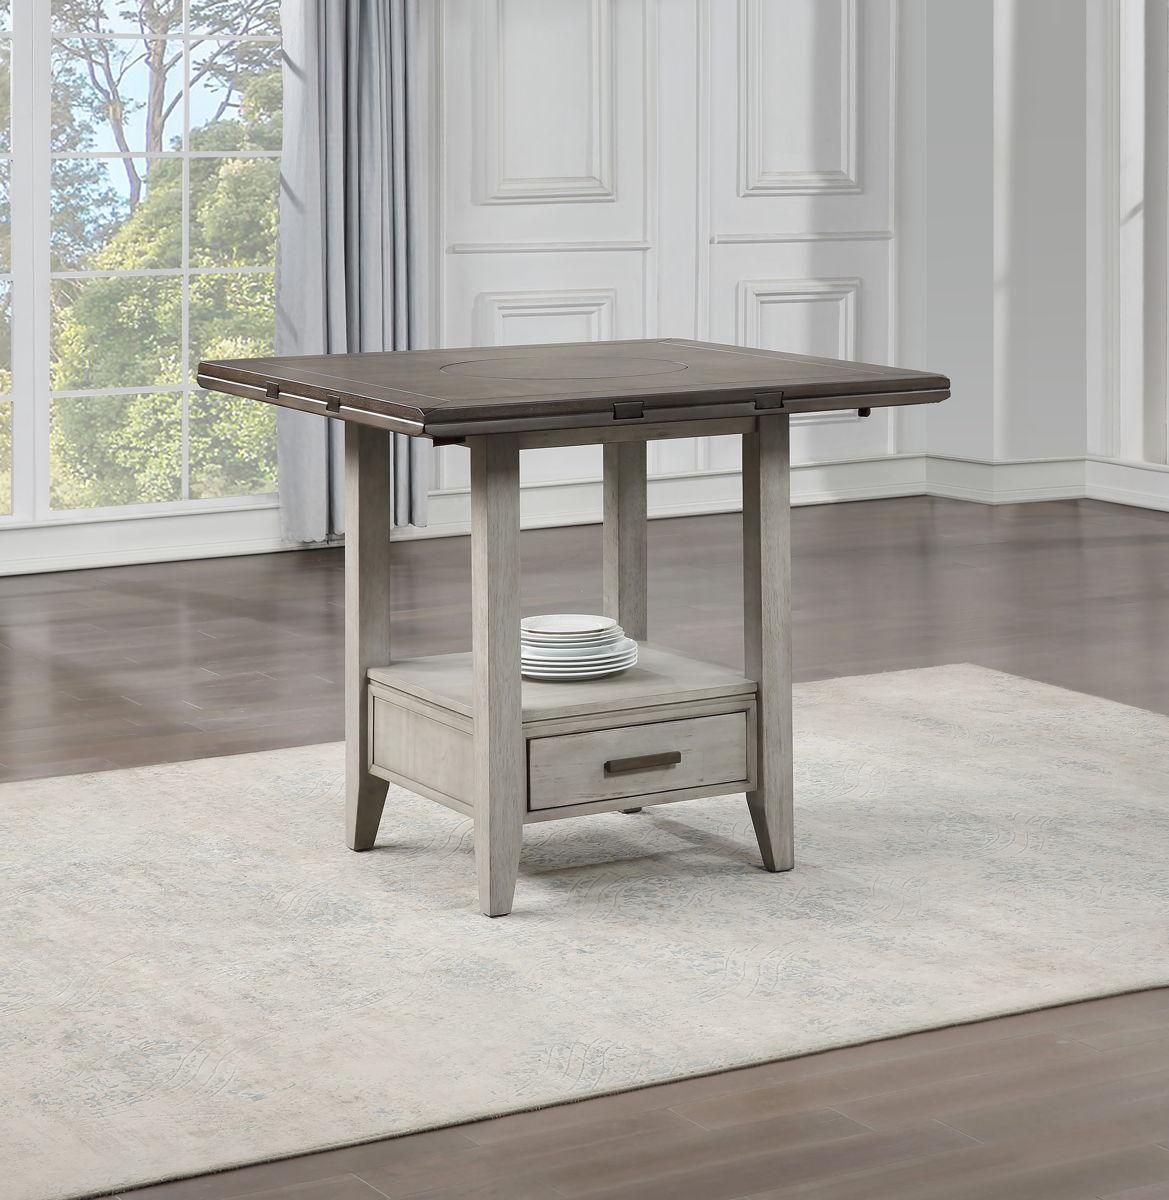 Steve Silver Furniture - Abacus - Drop Leaf Counter Table - Dark Brown - 5th Avenue Furniture